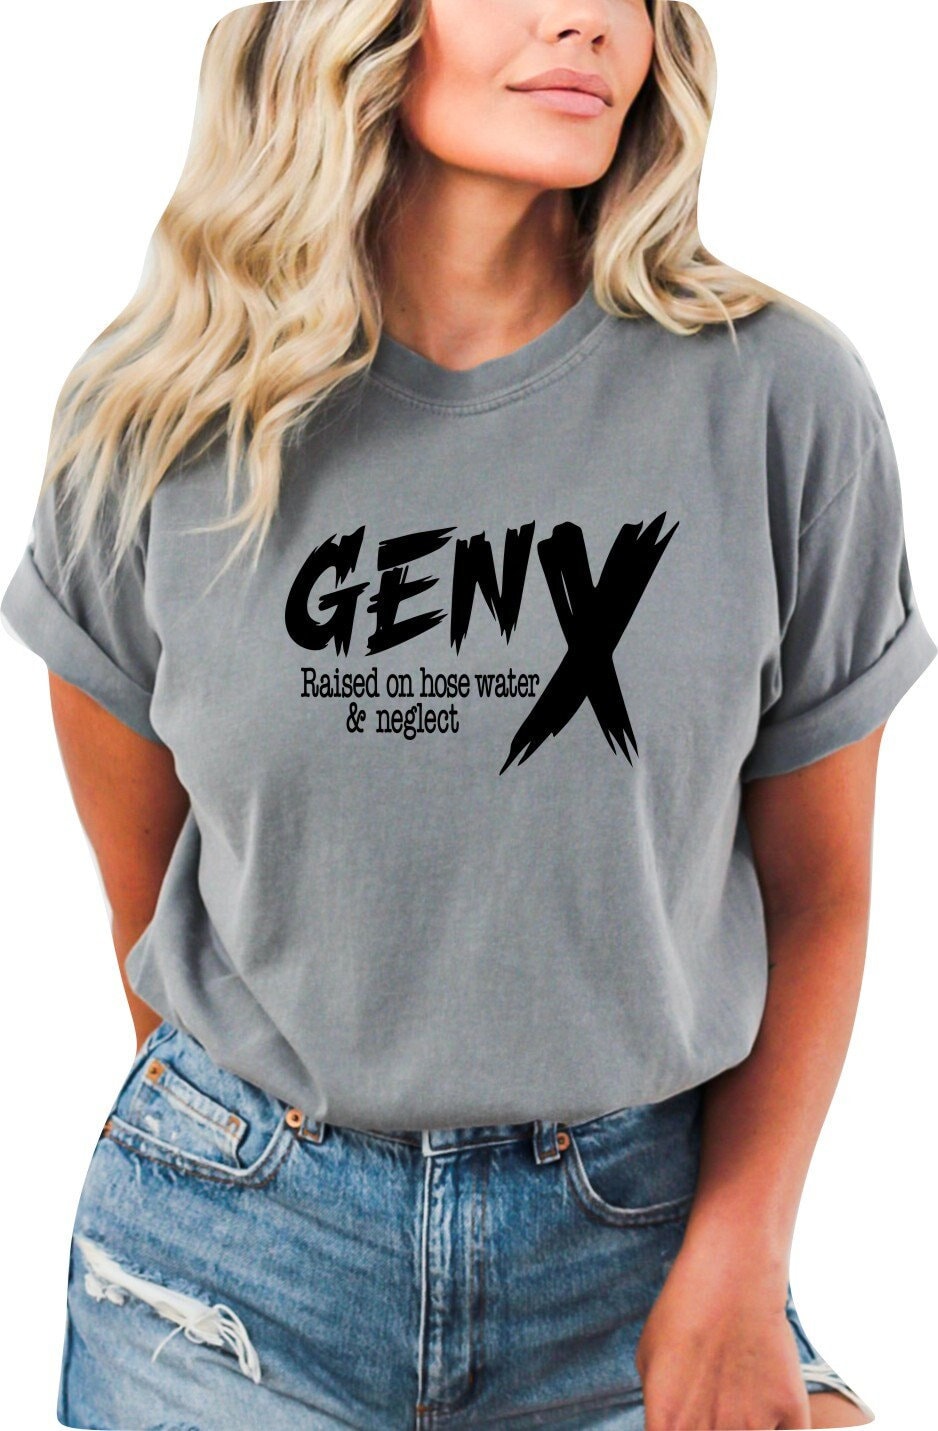 Gen X Retro TShirt Generation X Shirt Generation X Shirt Funny TShirt Raised on Hose Water and Neglect Generation X T-Shirt